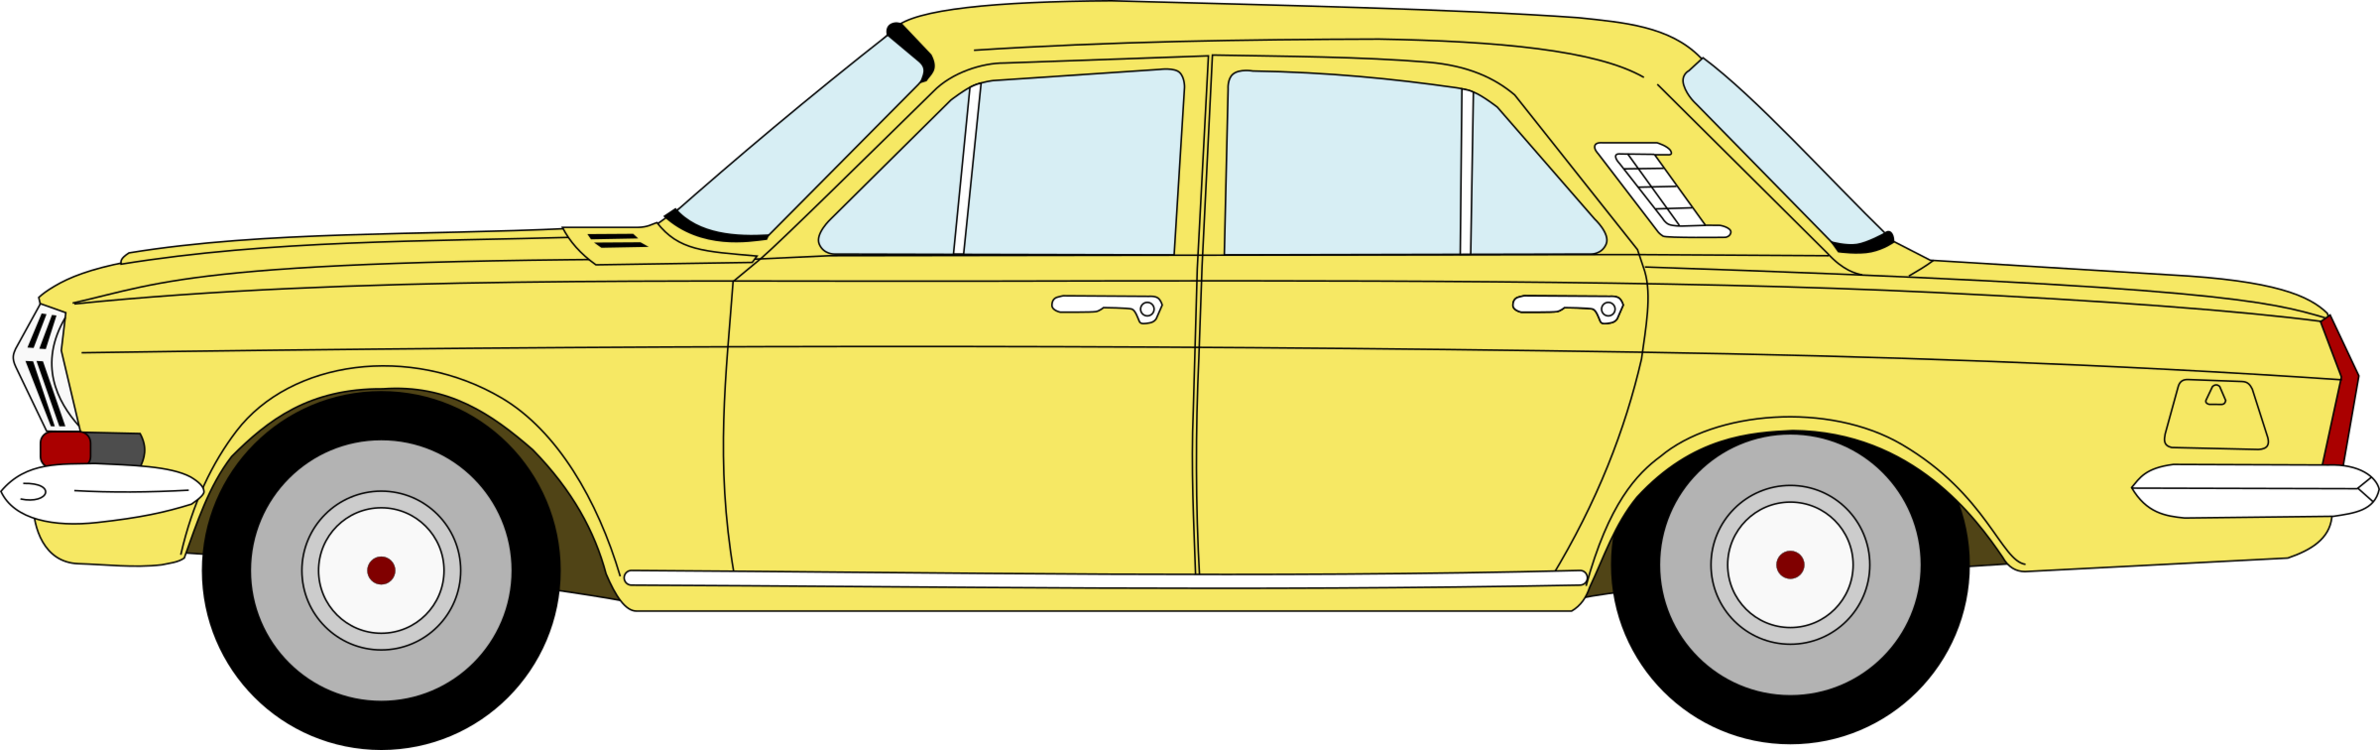 Classic Car,CoupÃ©,Car